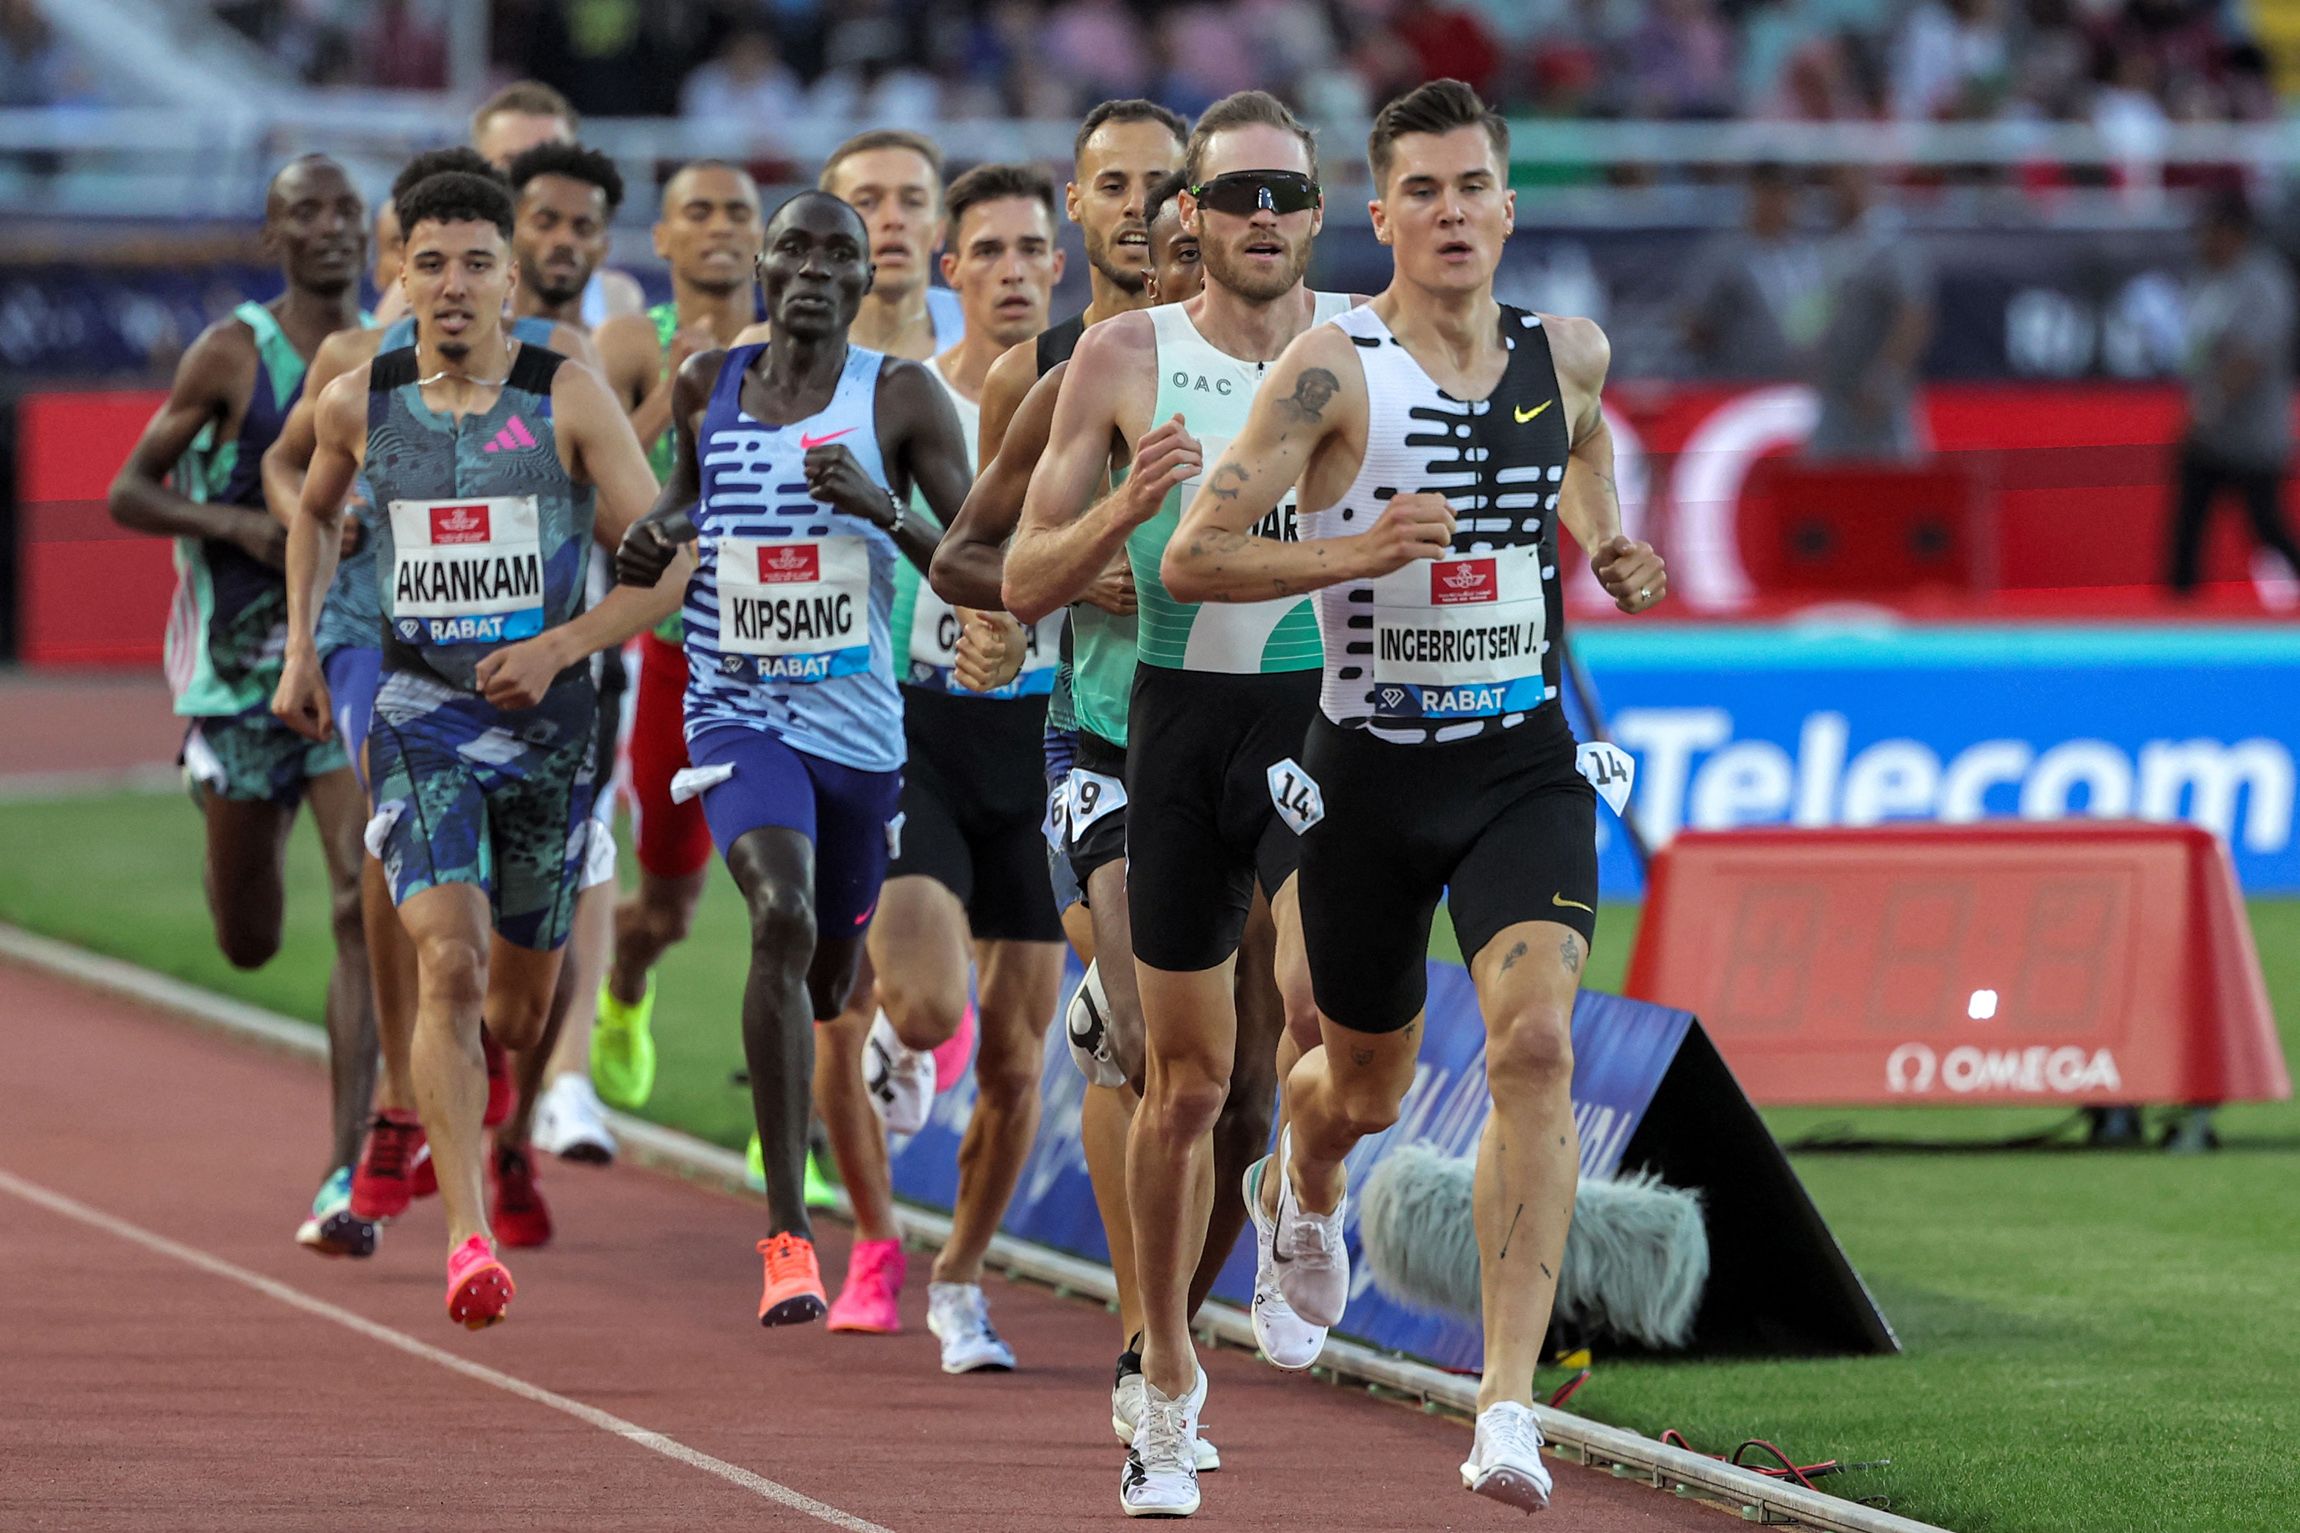 Jakob Ingebrigtsen leads the 1500m in Rabat